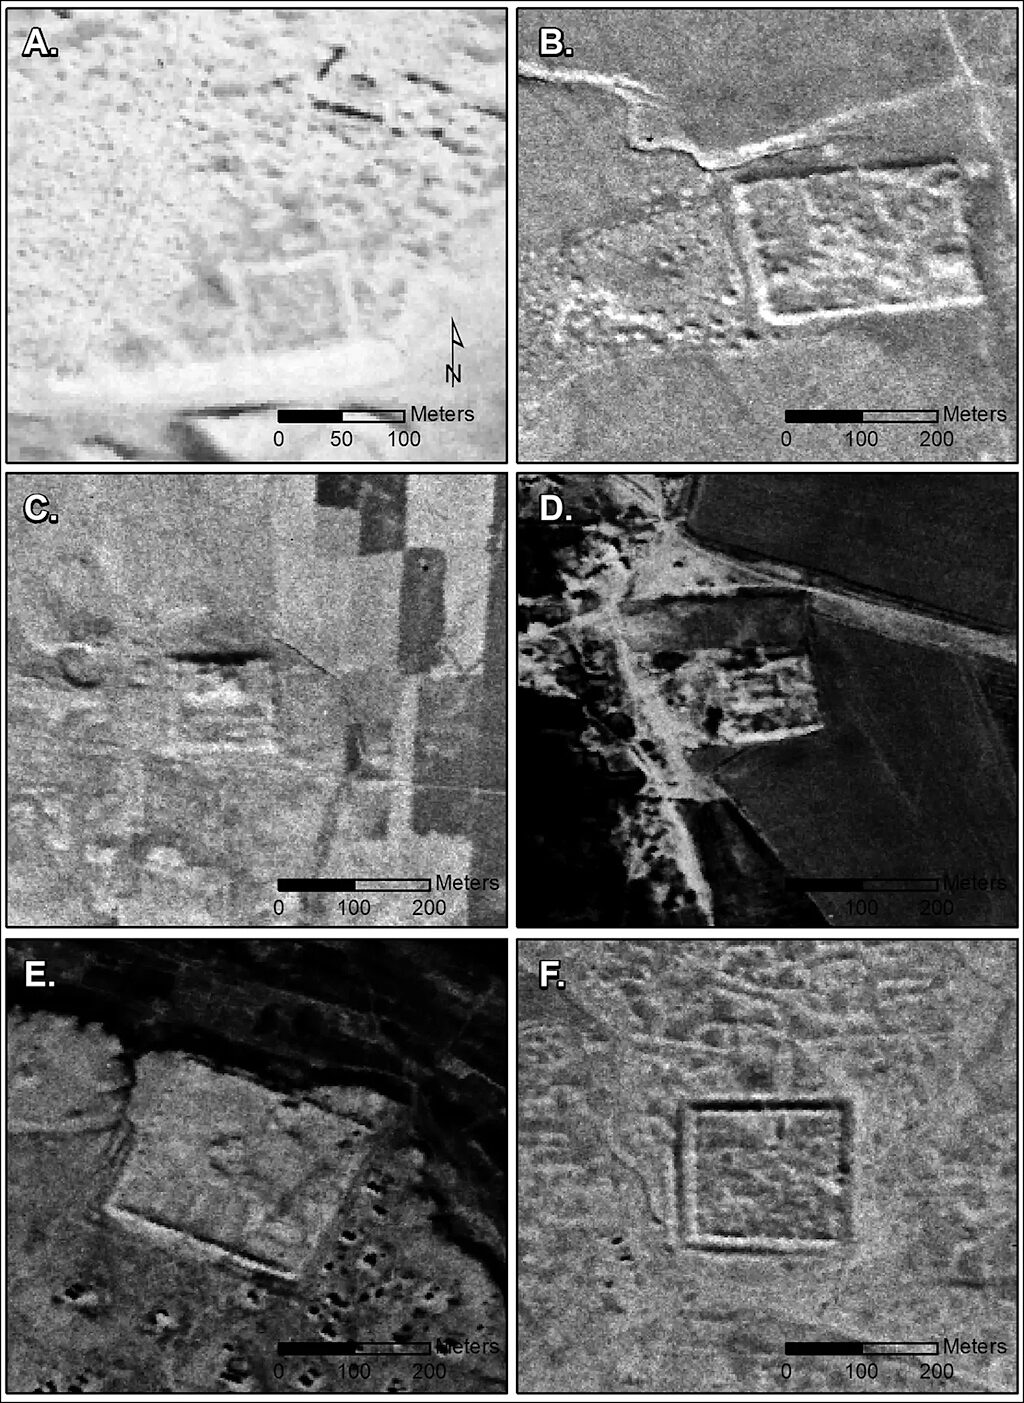 roman forts discovered spy satellites